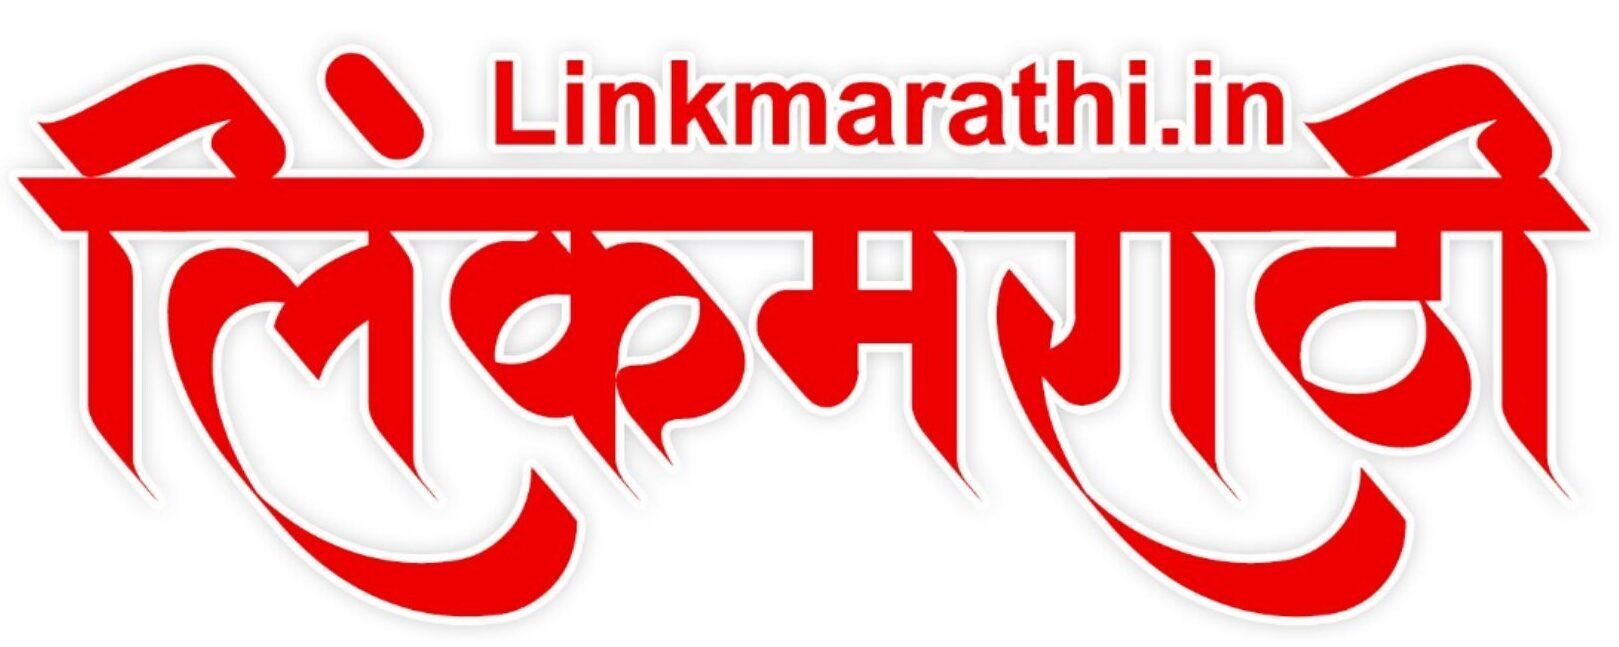 health is wealth essay in marathi language